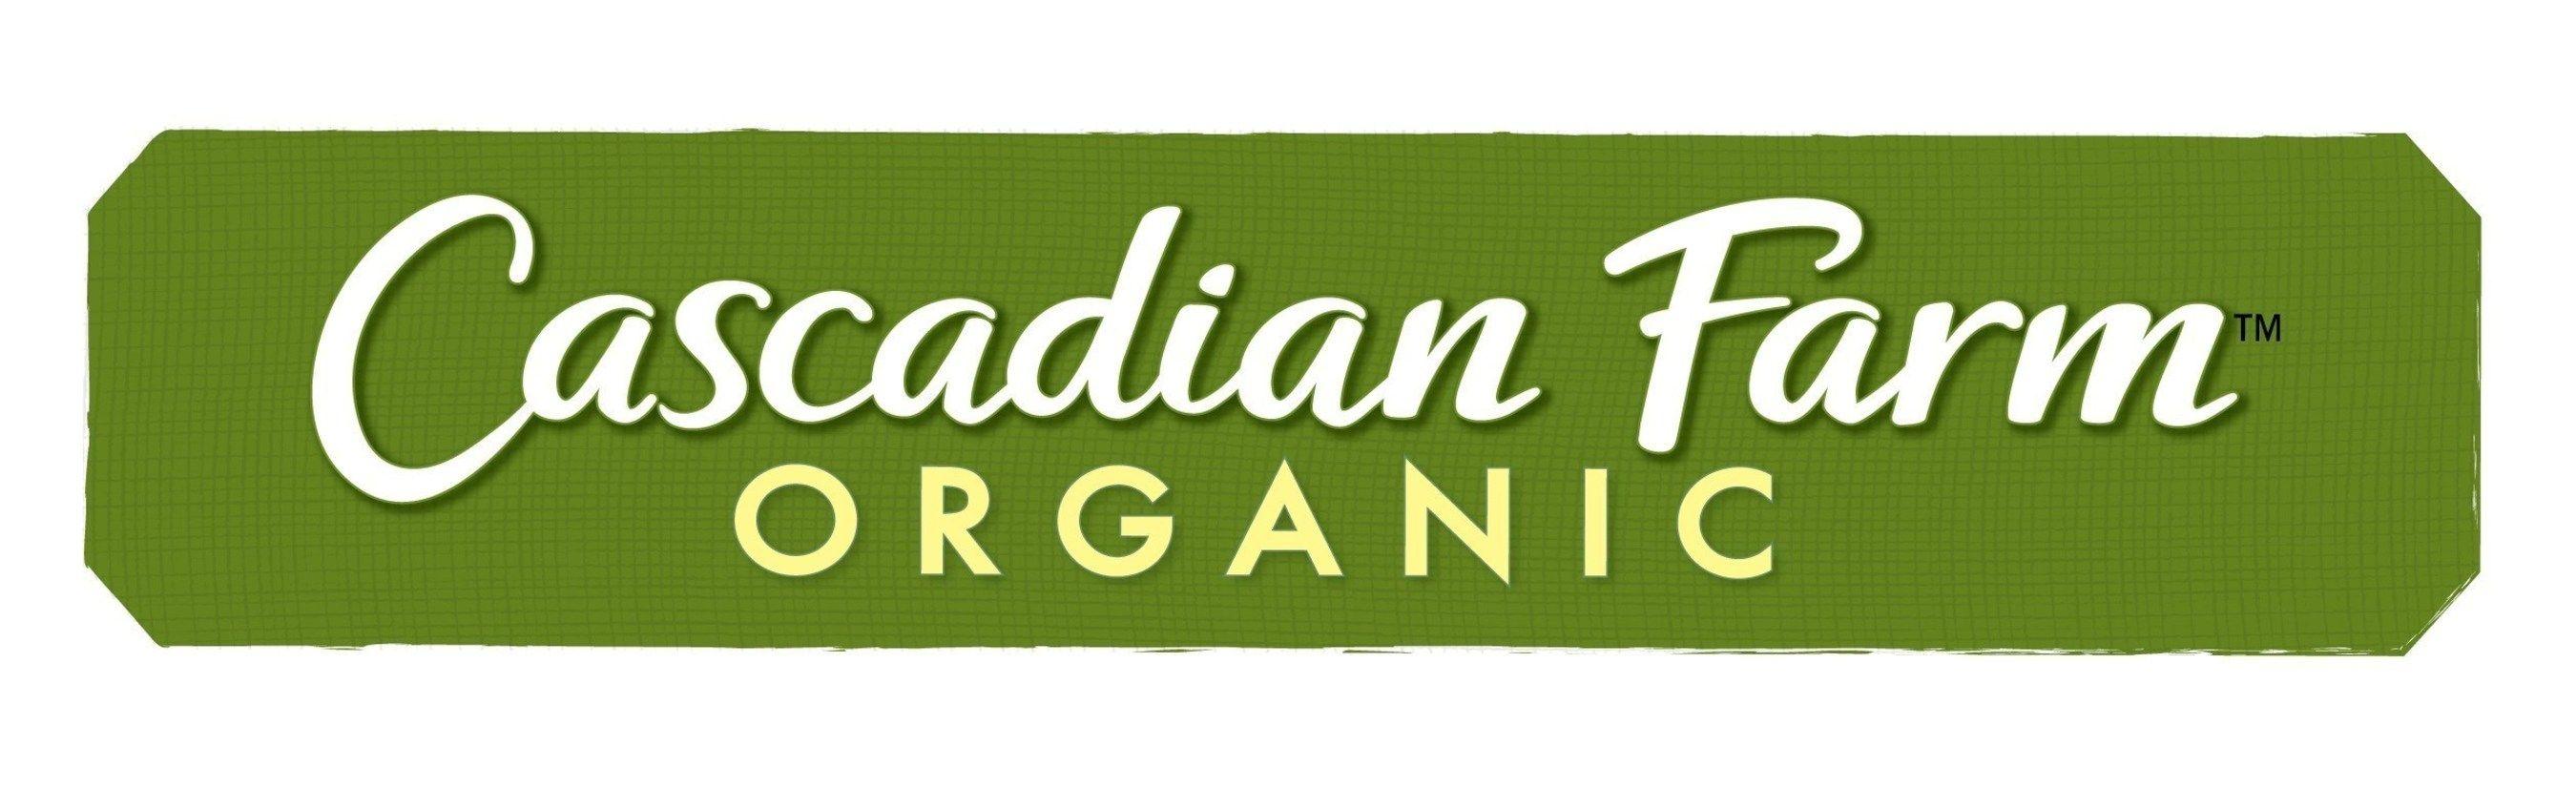 Cascadian Farms Logo - Cascadian Farm™ Commits to Funding Pollinator Habitat at Organic